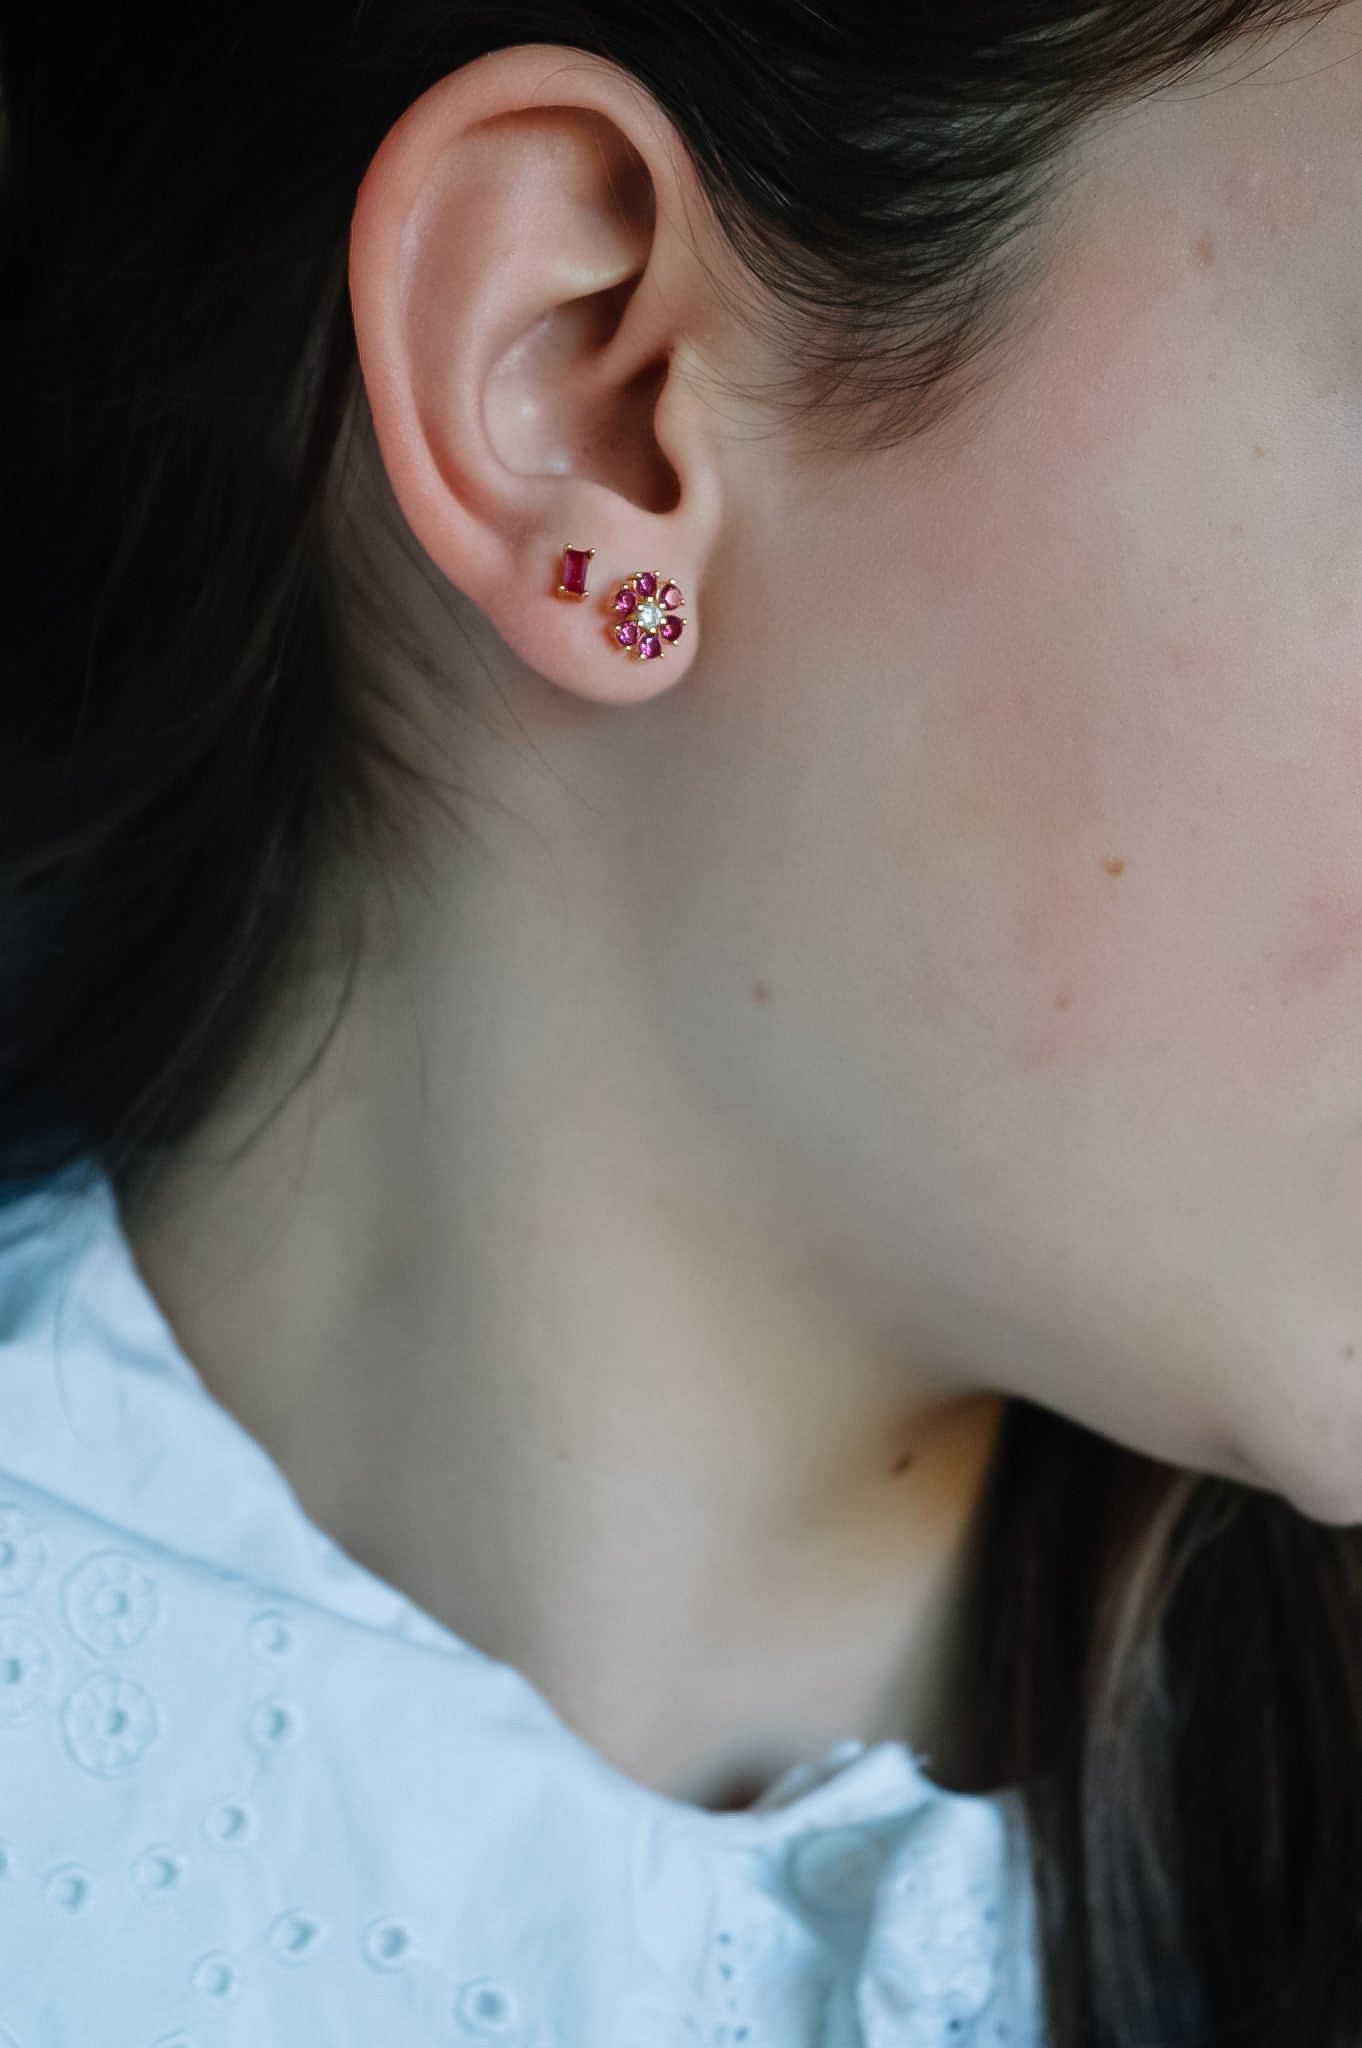 Flowers earrings - pink